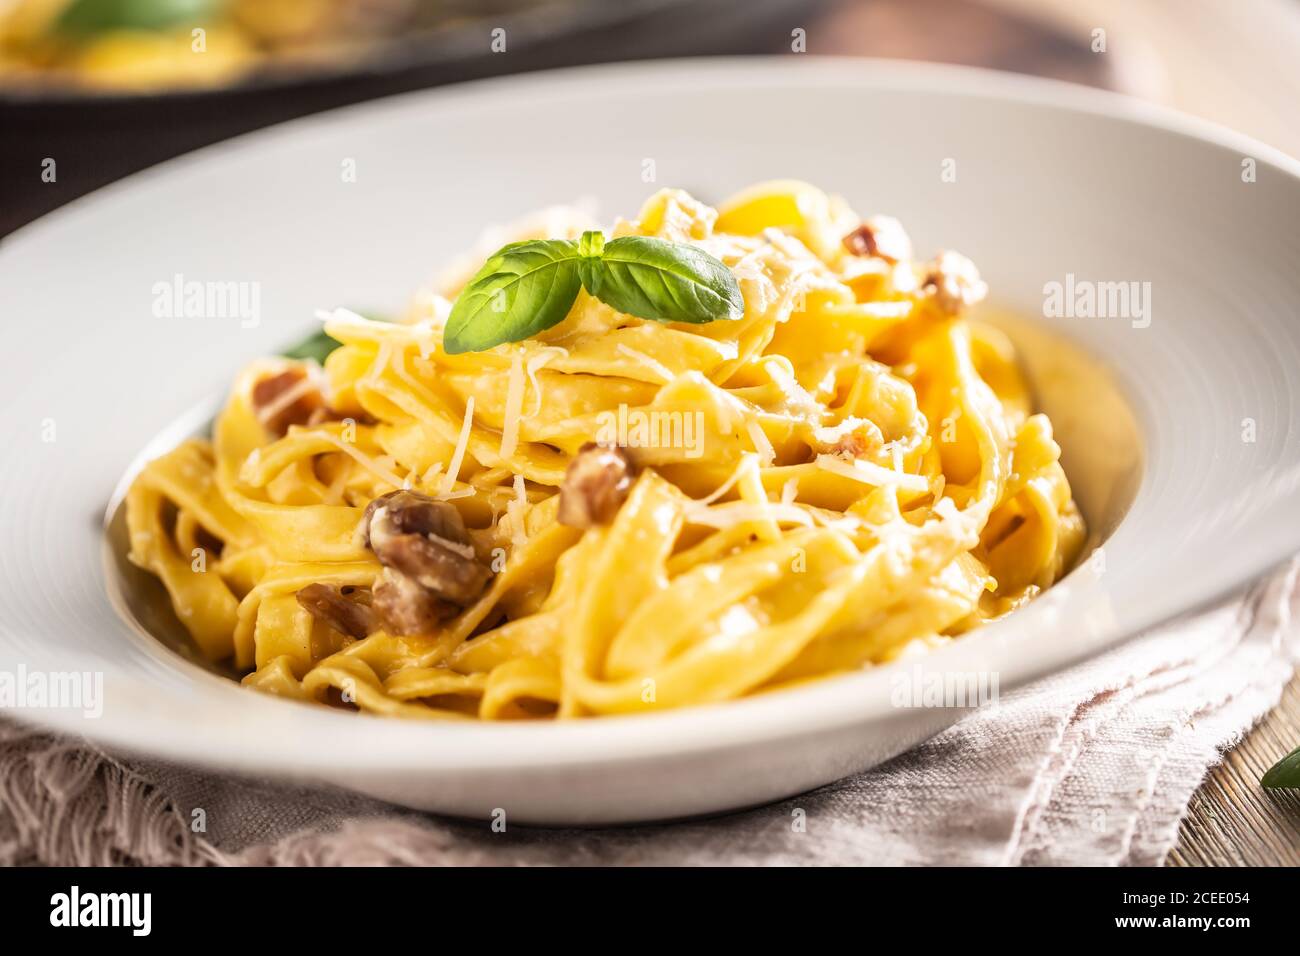 Italian food pasta tagliatelle carbonara with pancetta parmesan egg yolk and basil leaves Stock Photo